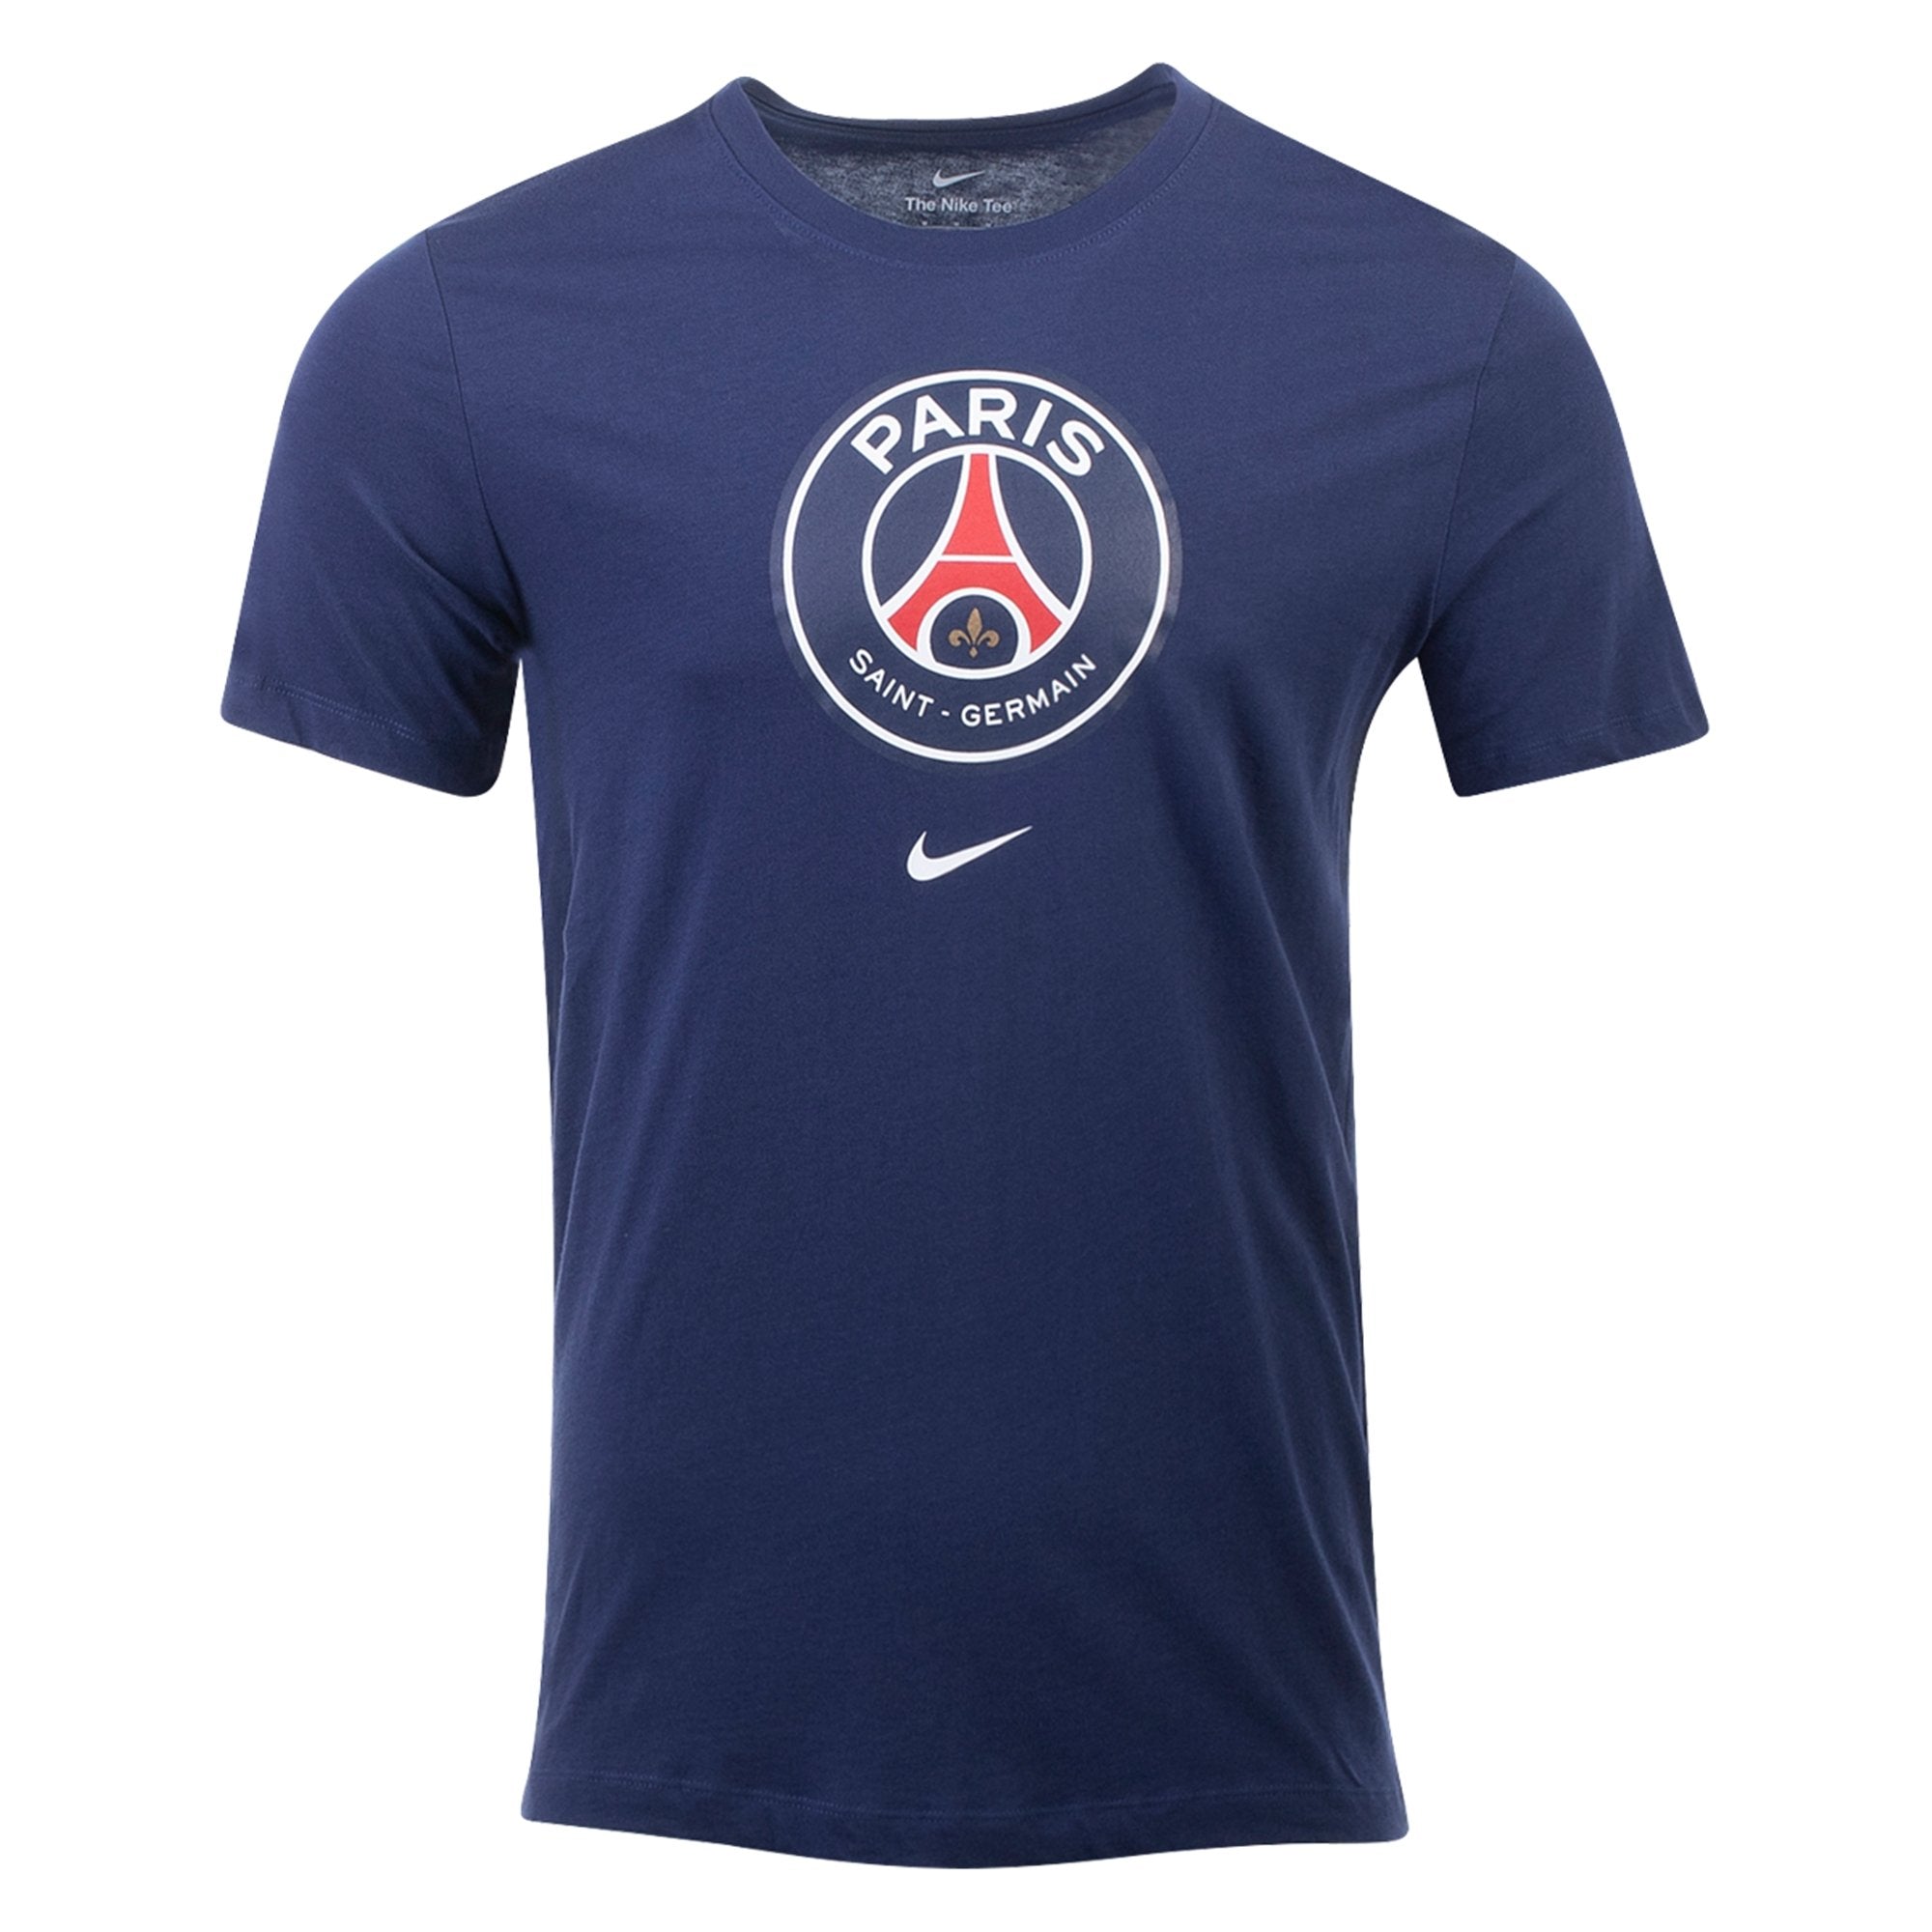 Nike Men's Paris Saint-Germain Crest Soccer T-Shirt-Navy